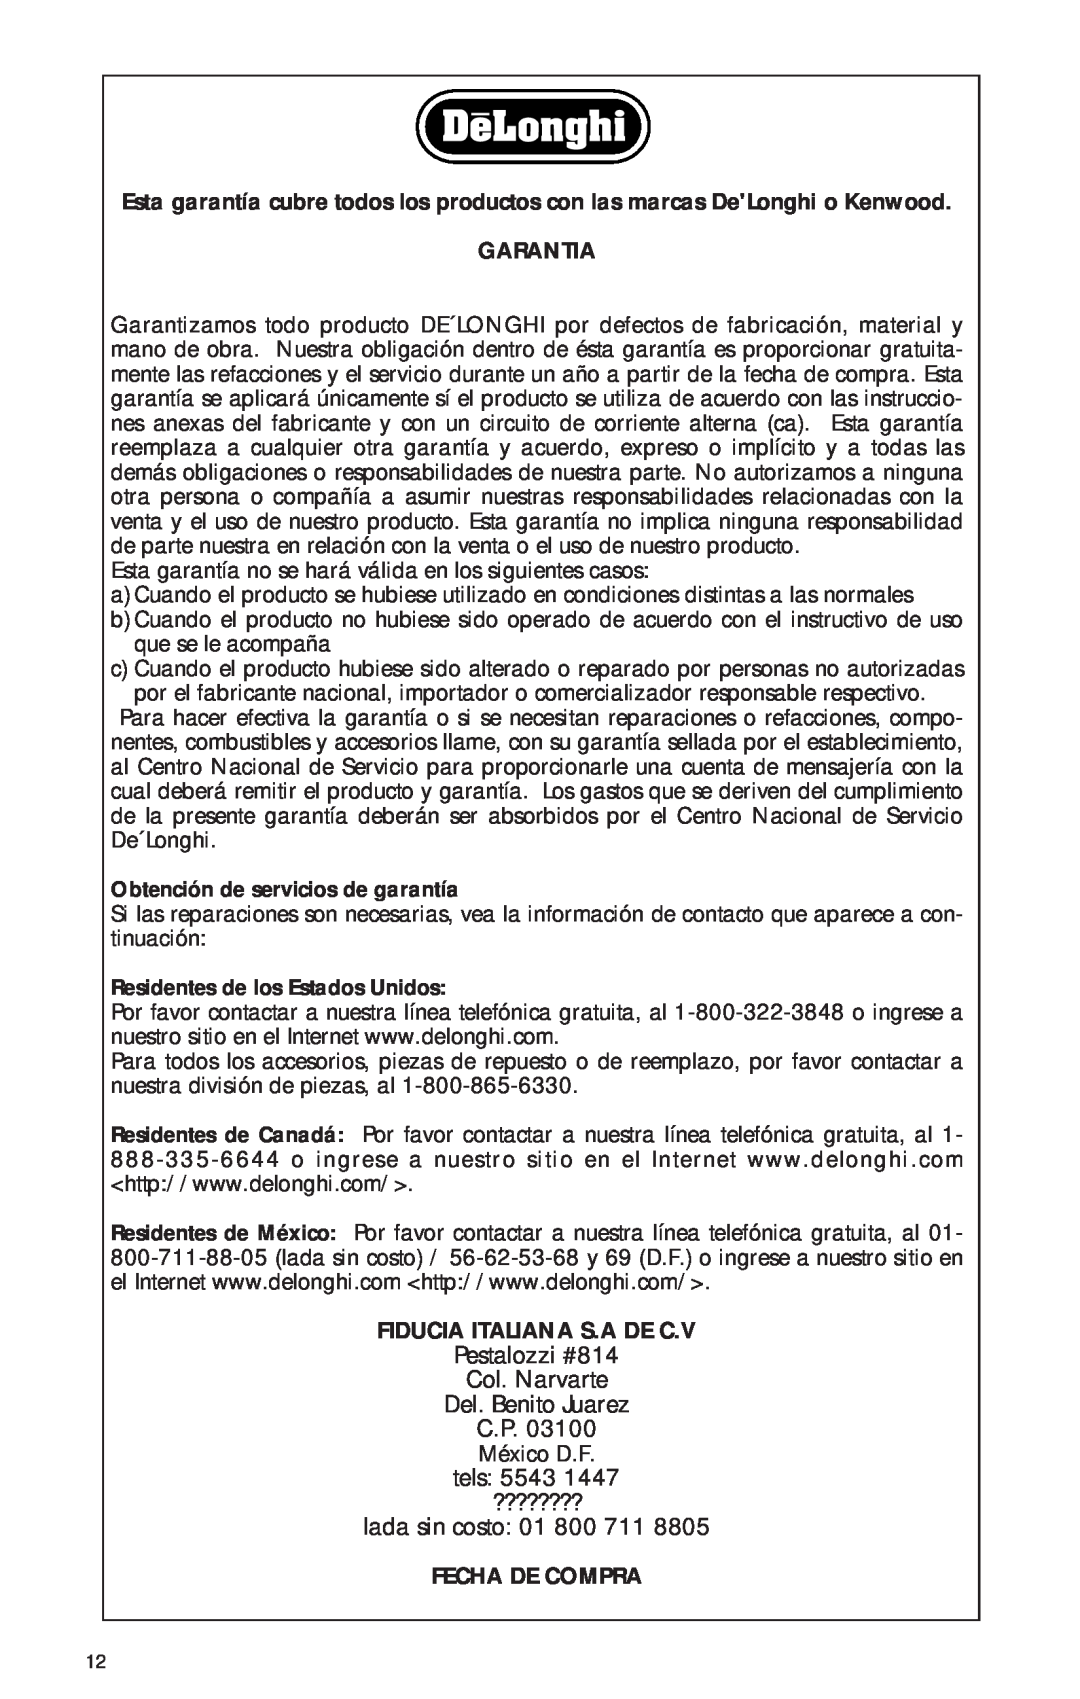 DeLonghi TRN0812T manual Garantia, FIDUCIA ITALIANA S.A DE C.V Pestalozzi #814, Col. Narvarte Del. Benito Juarez C.P 